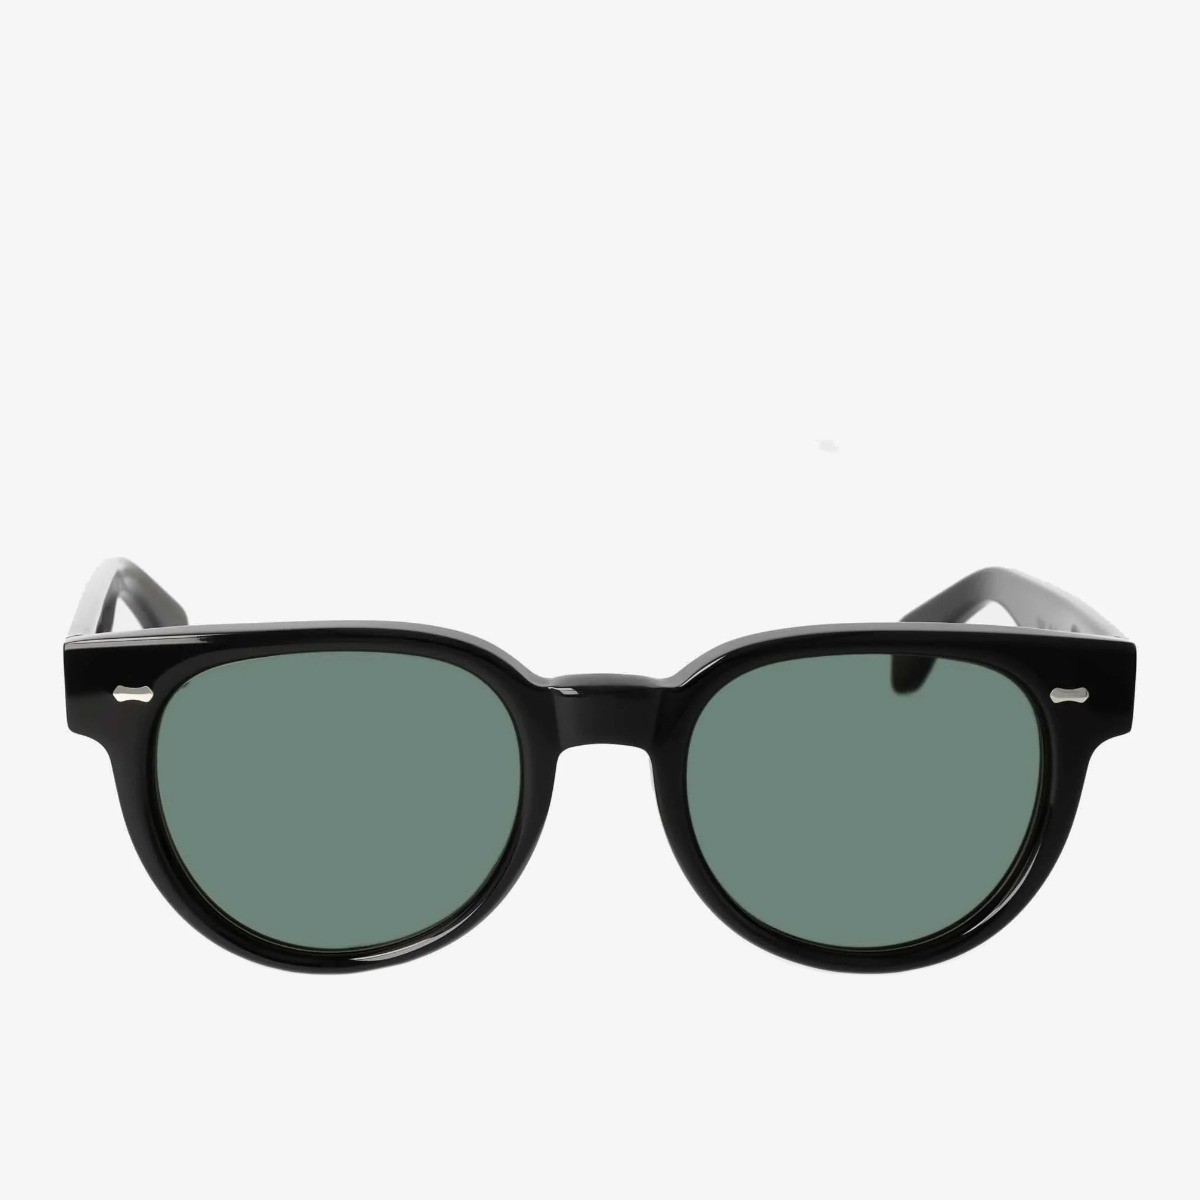 TBD Eyewear Palm black frame green lenses sunglasses